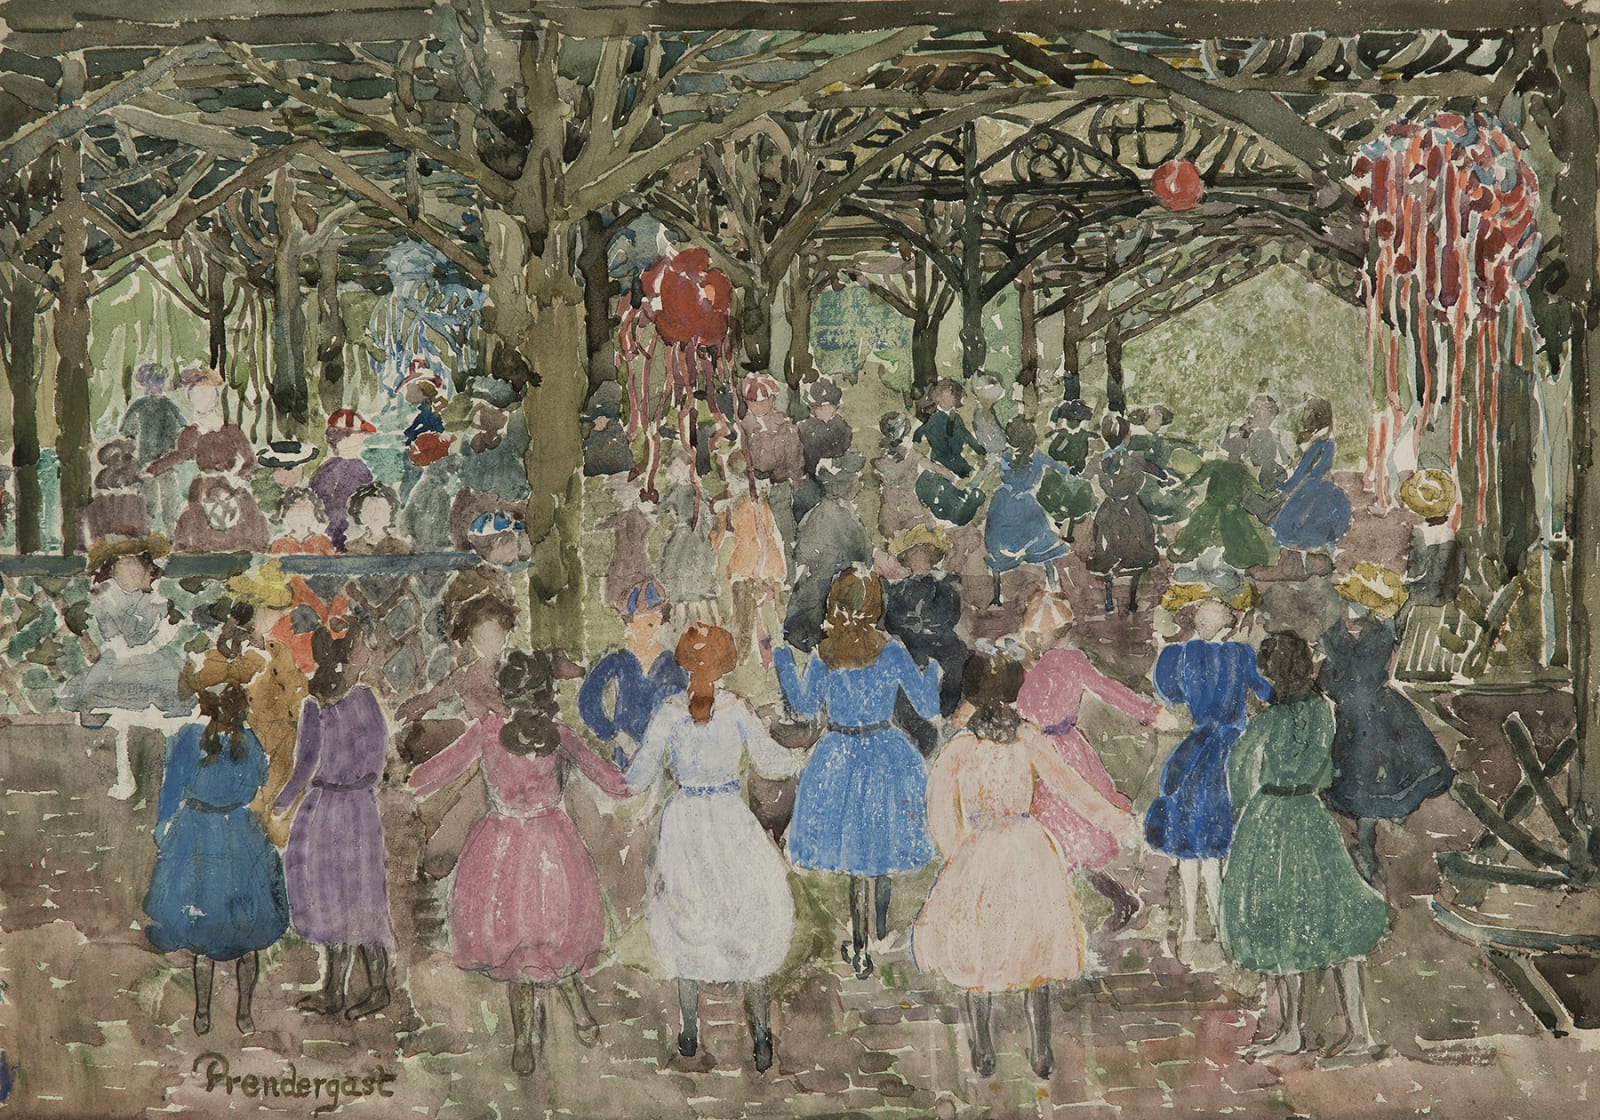 Maurice Prendergast, Central Park, c. 1900-1903